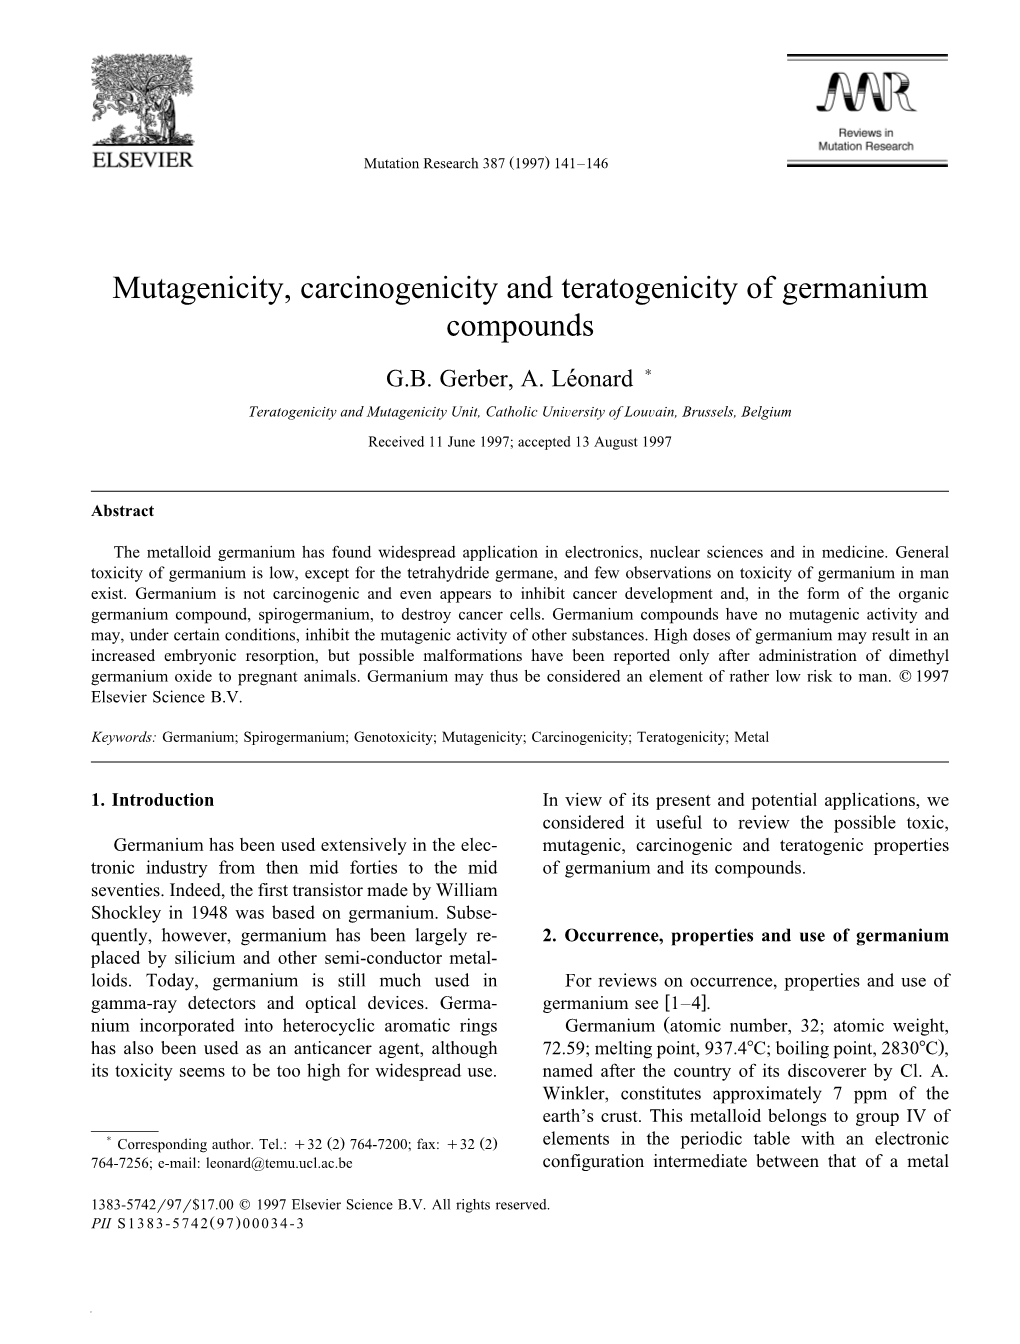 Mutagenicity, Carcinogenicity and Teratogenicity of Germanium Compounds G.B